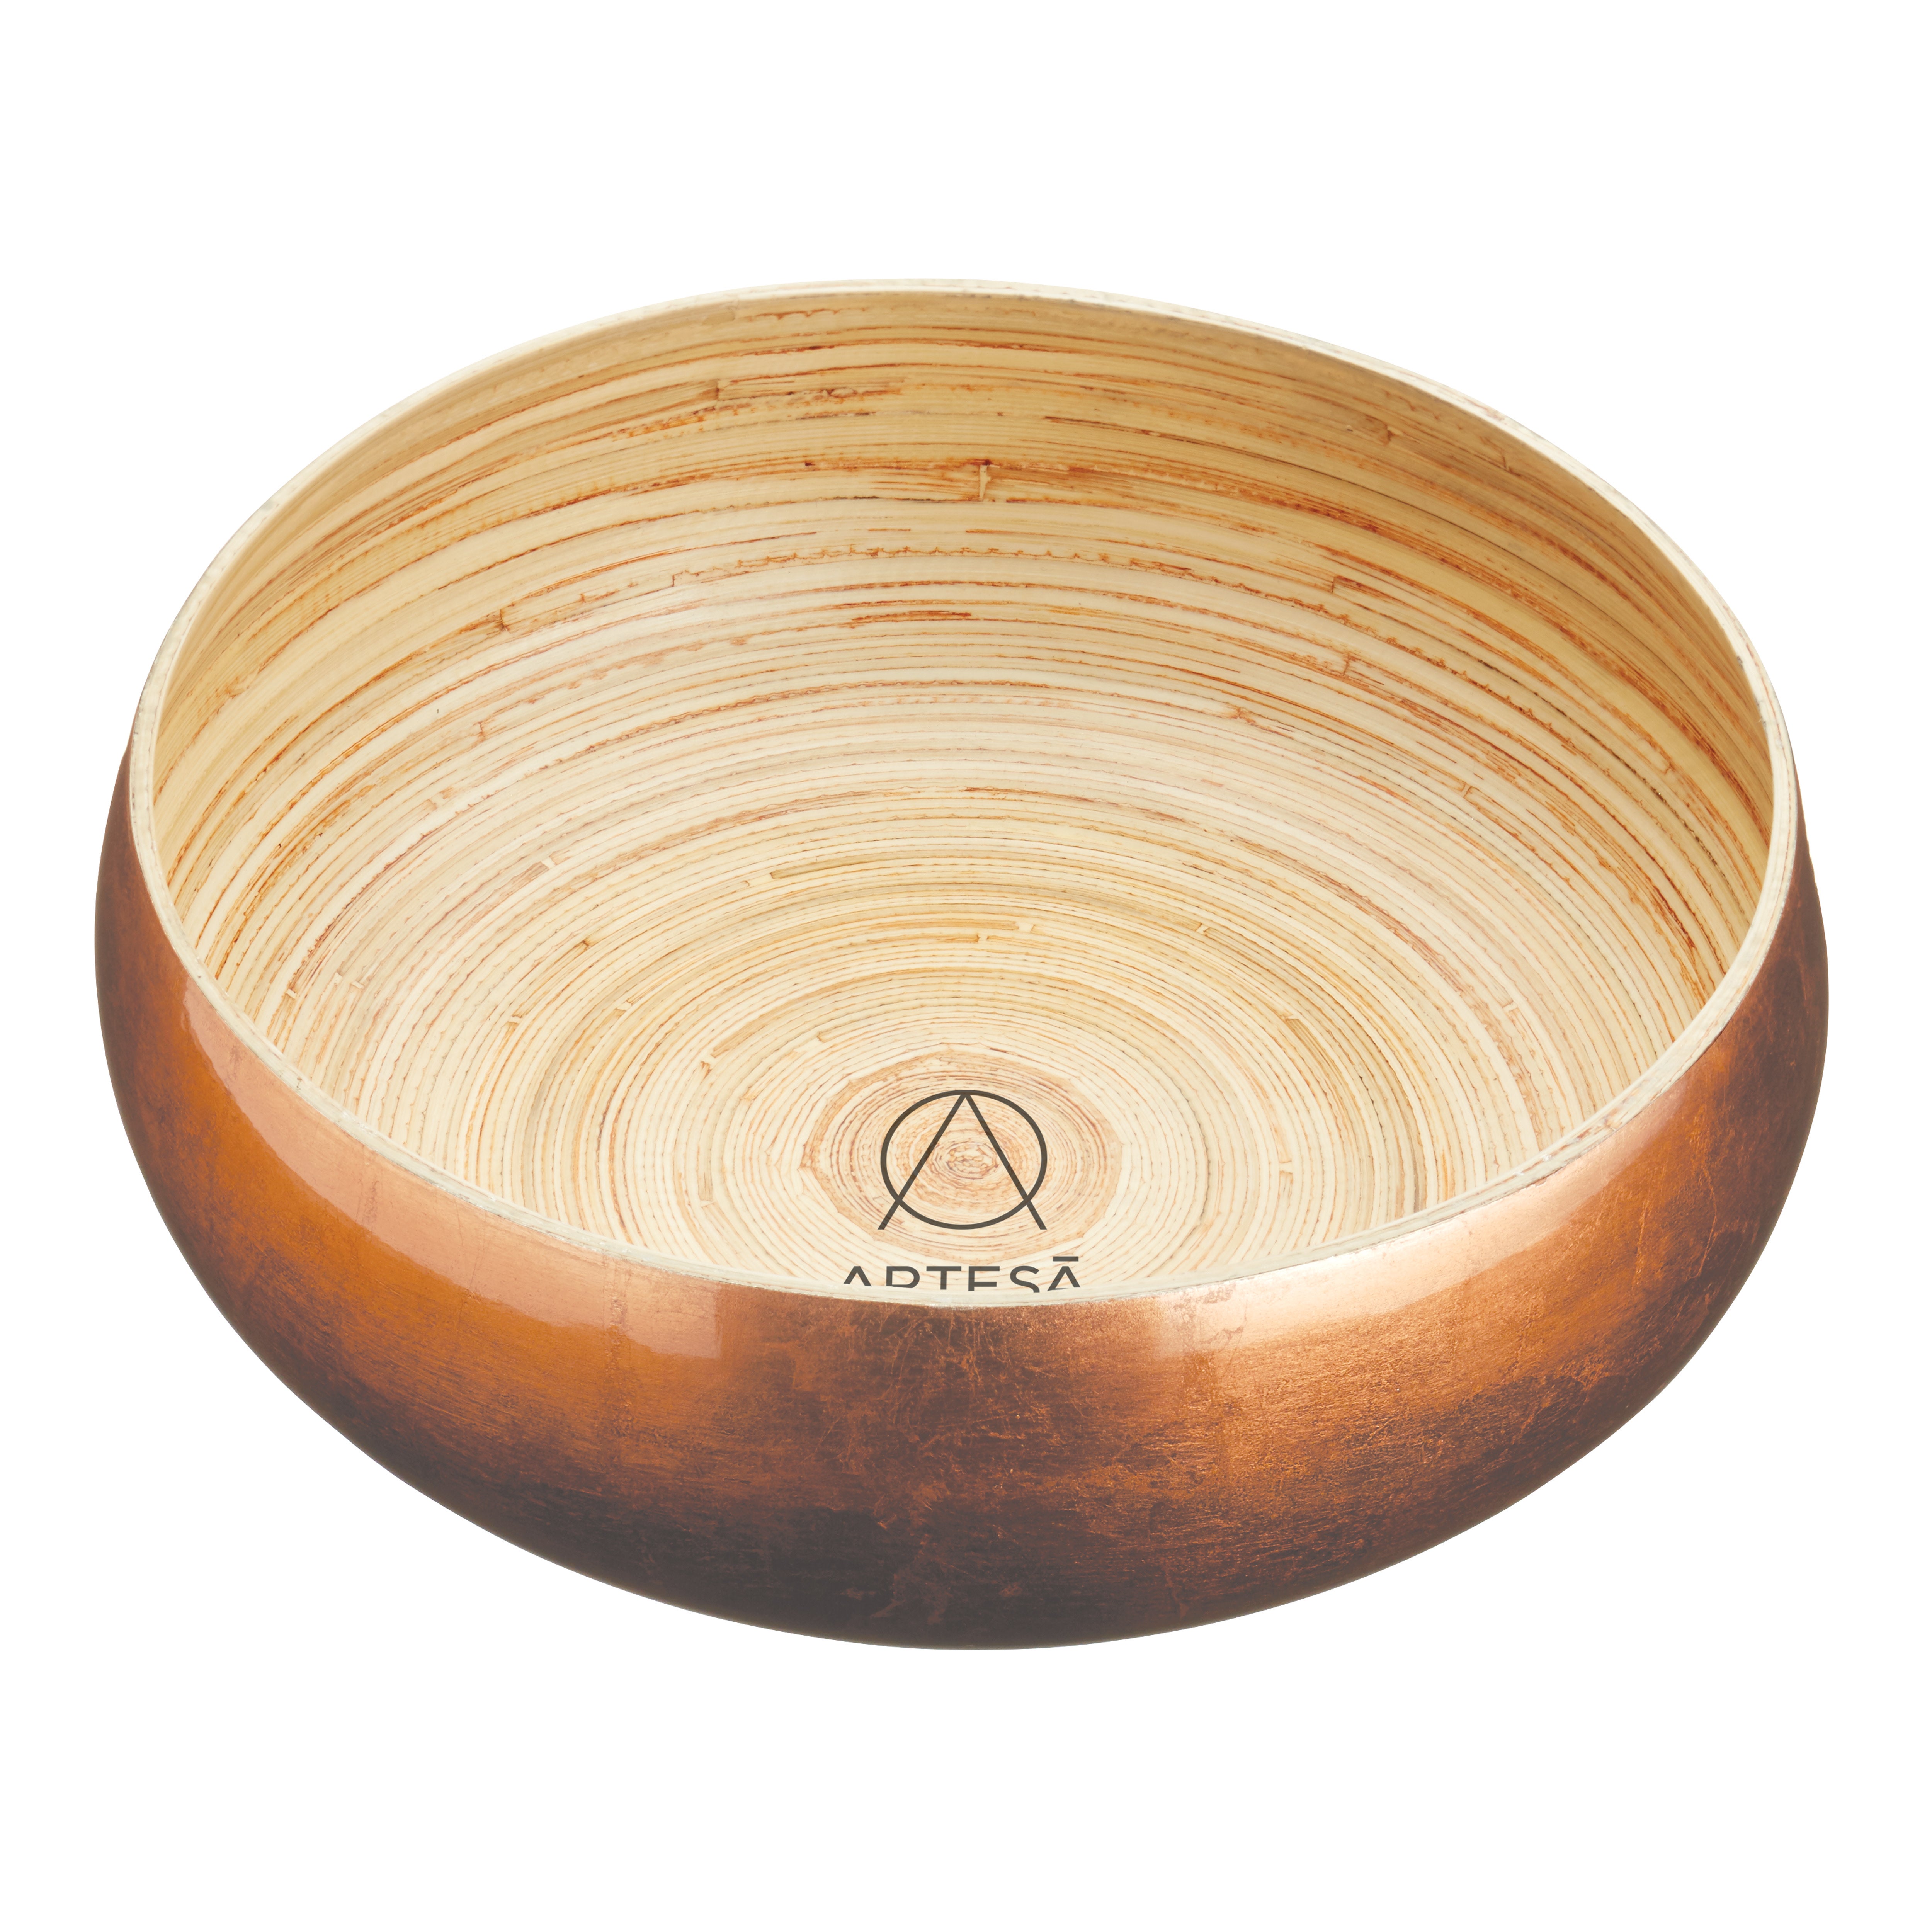 Artesà Copper Finish Bamboo Serving Bowl